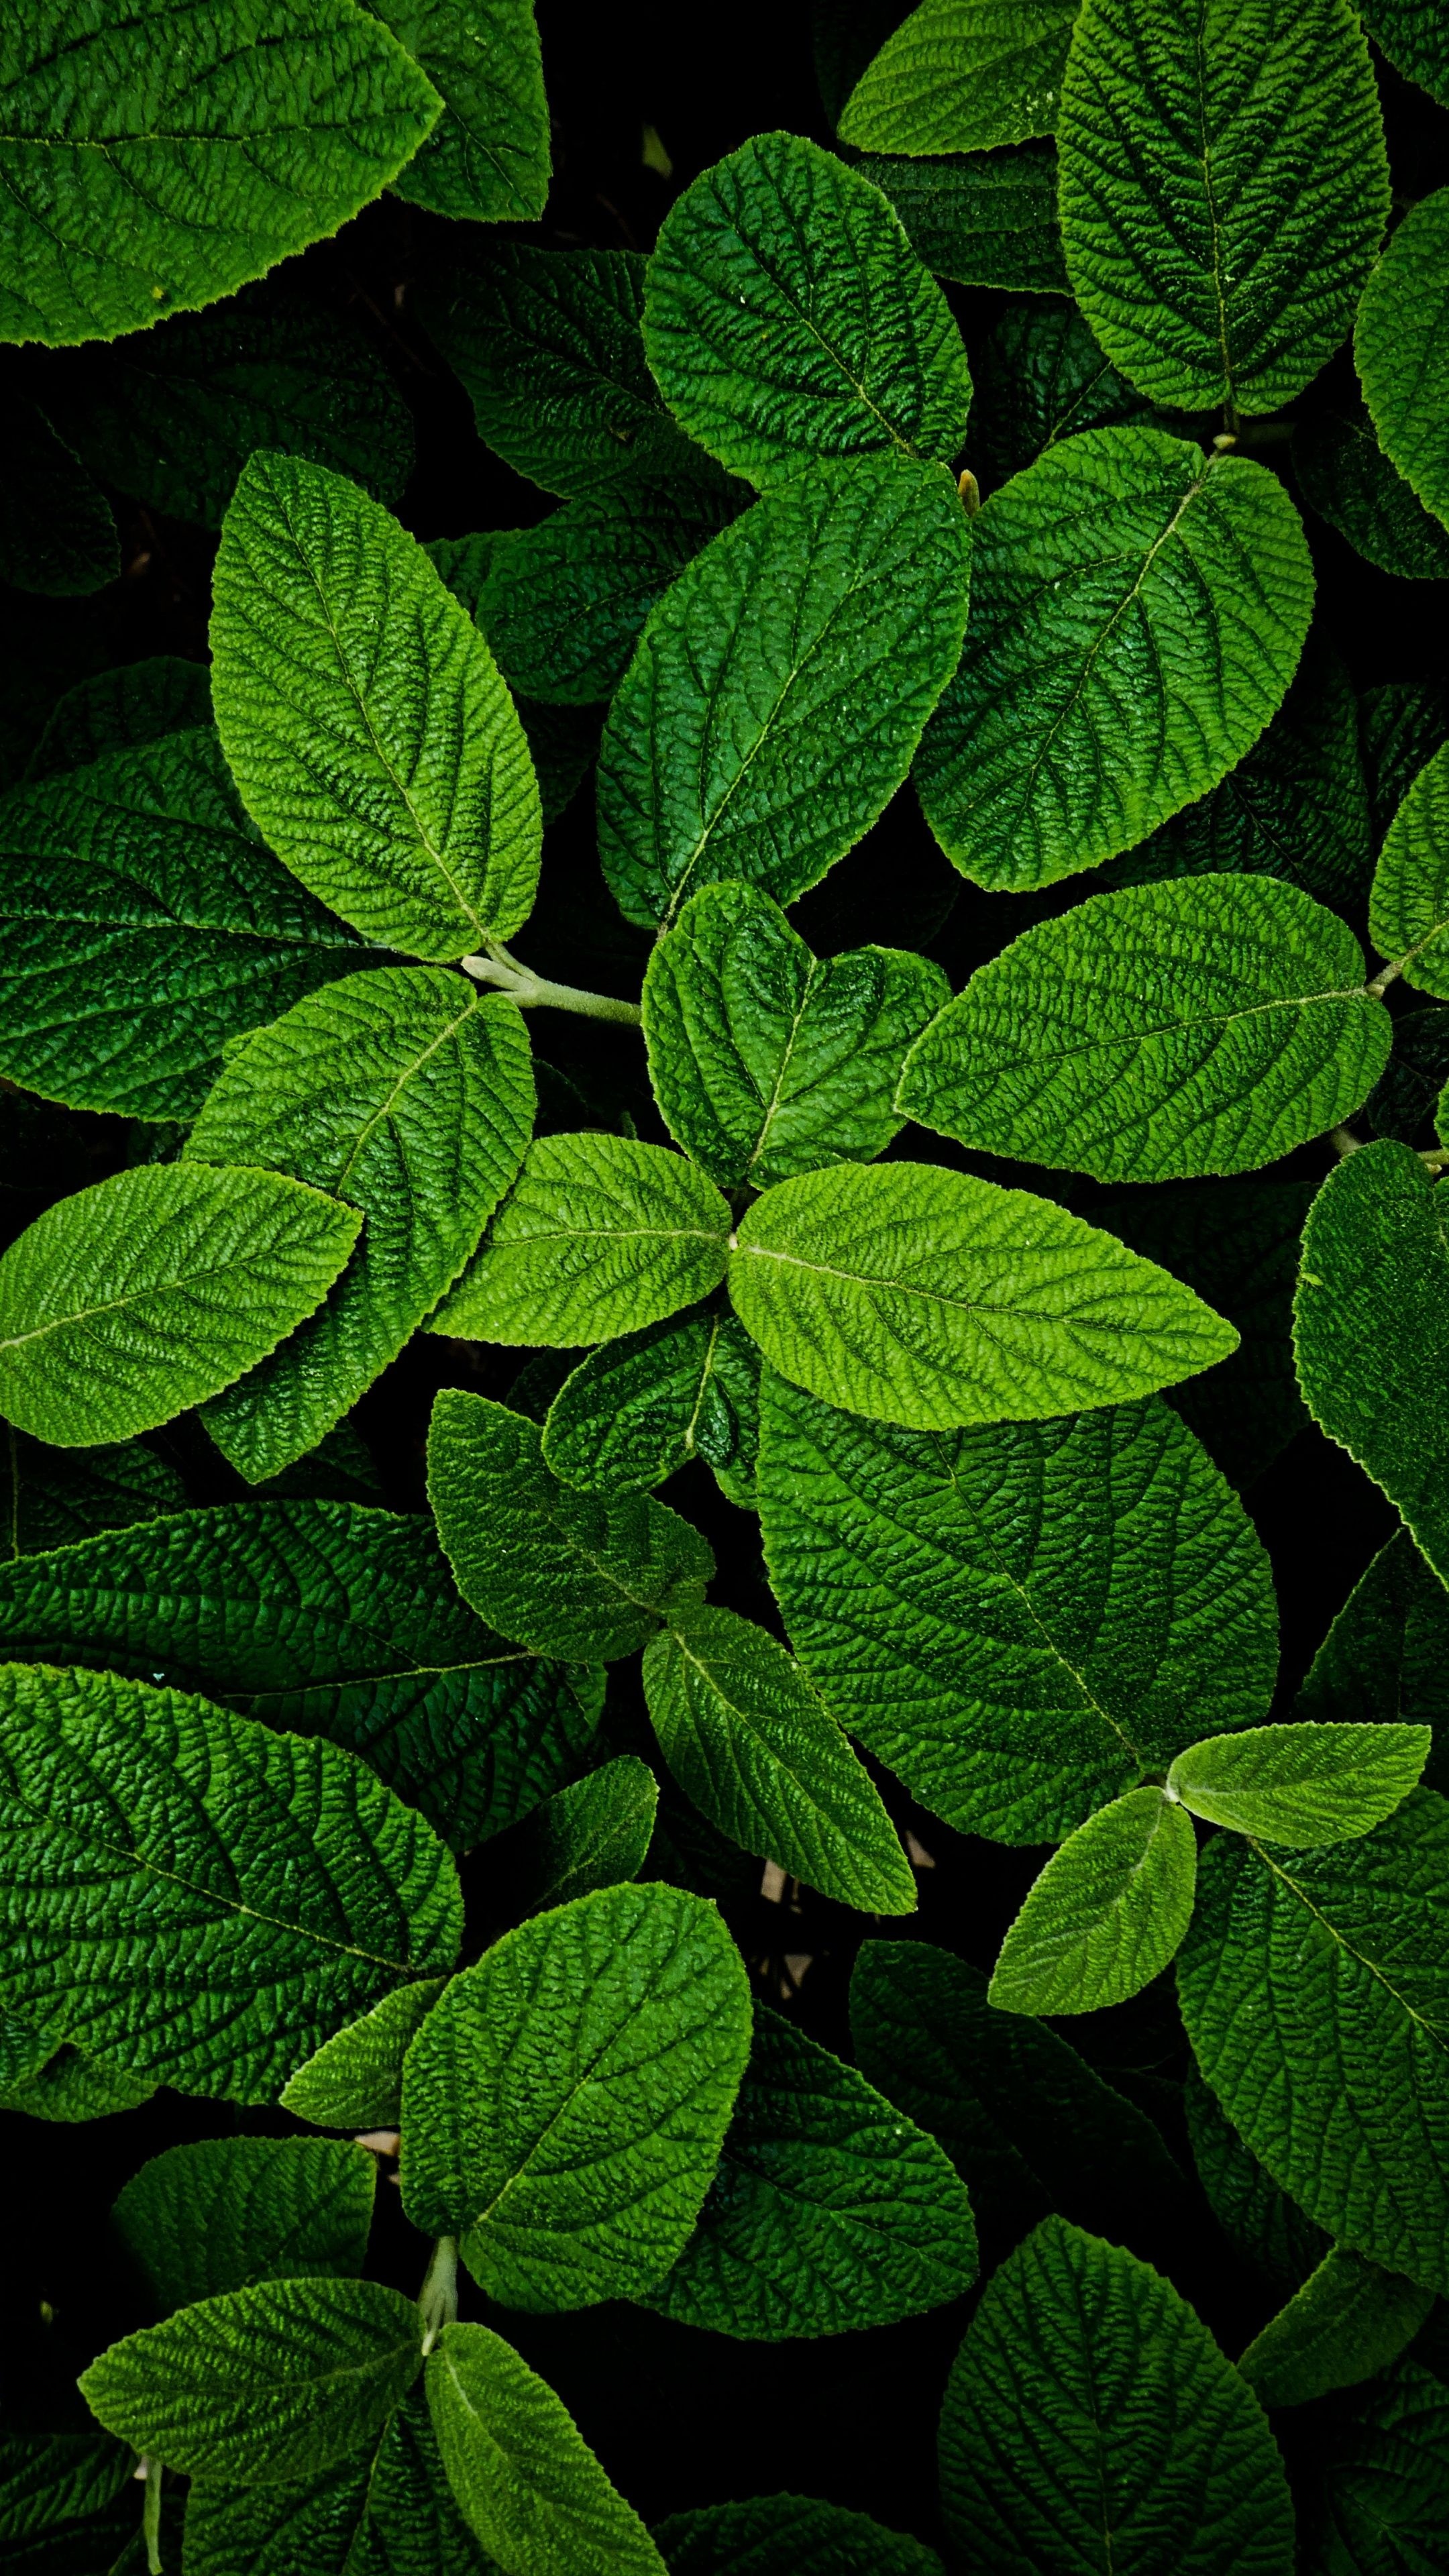 Green Leaf: Evergreen jungle forest, A group of fern leaves, Vascular plants. 2160x3840 4K Wallpaper.